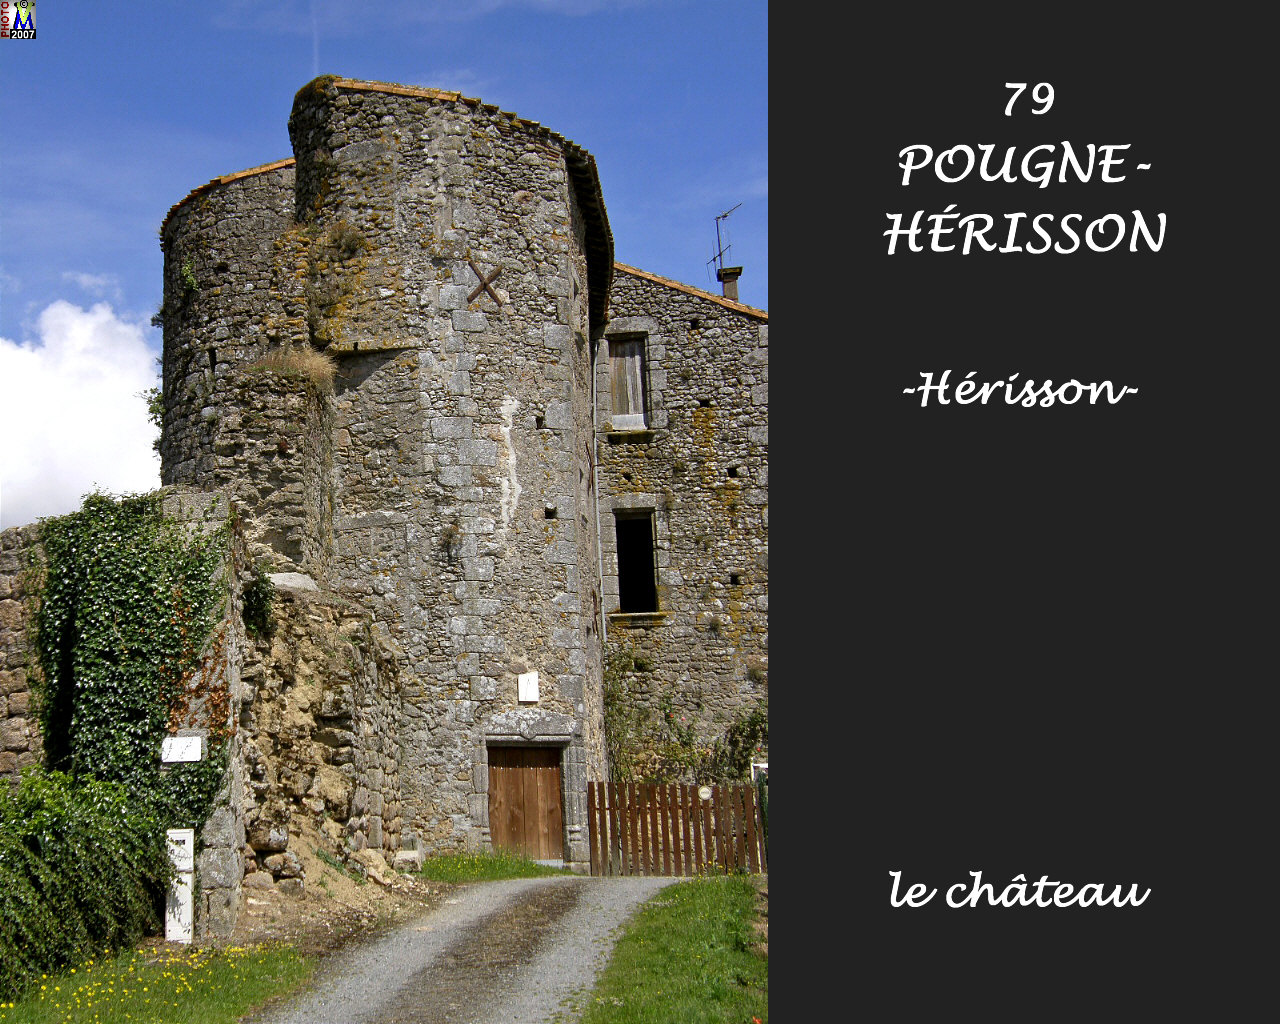 79POUGNE-HERISSON_herisson_chateau_110.jpg